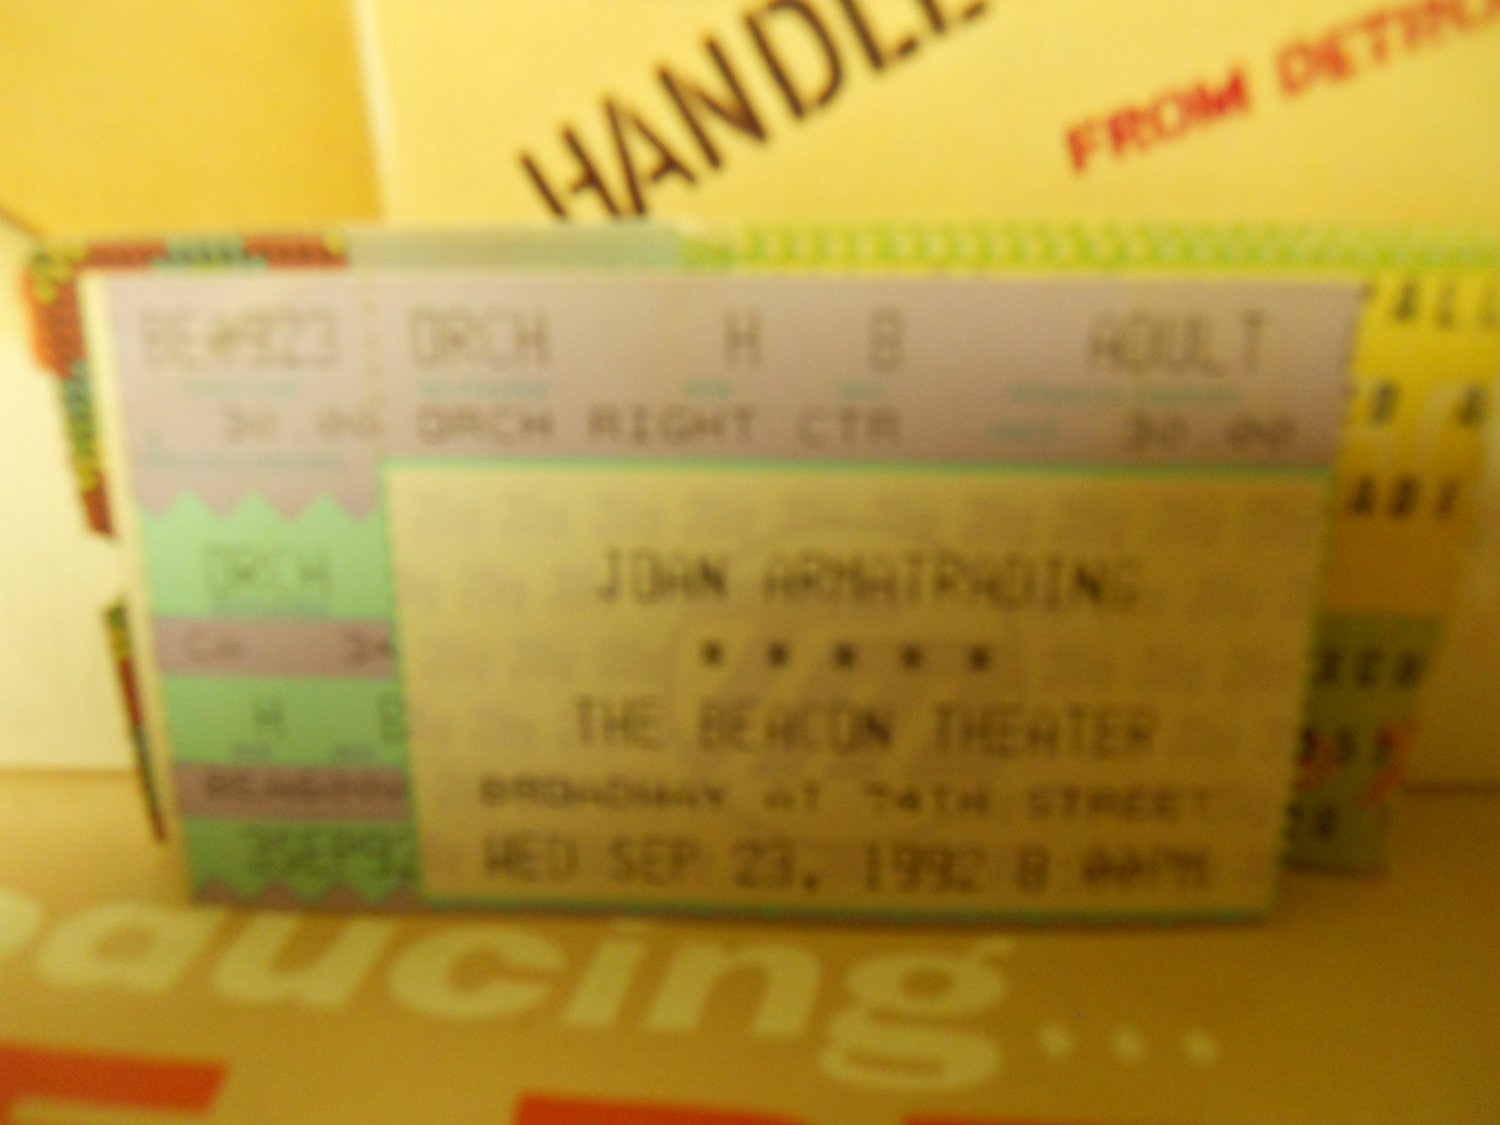 joan armatrading ex 1992 beacon theater new york ticket stub